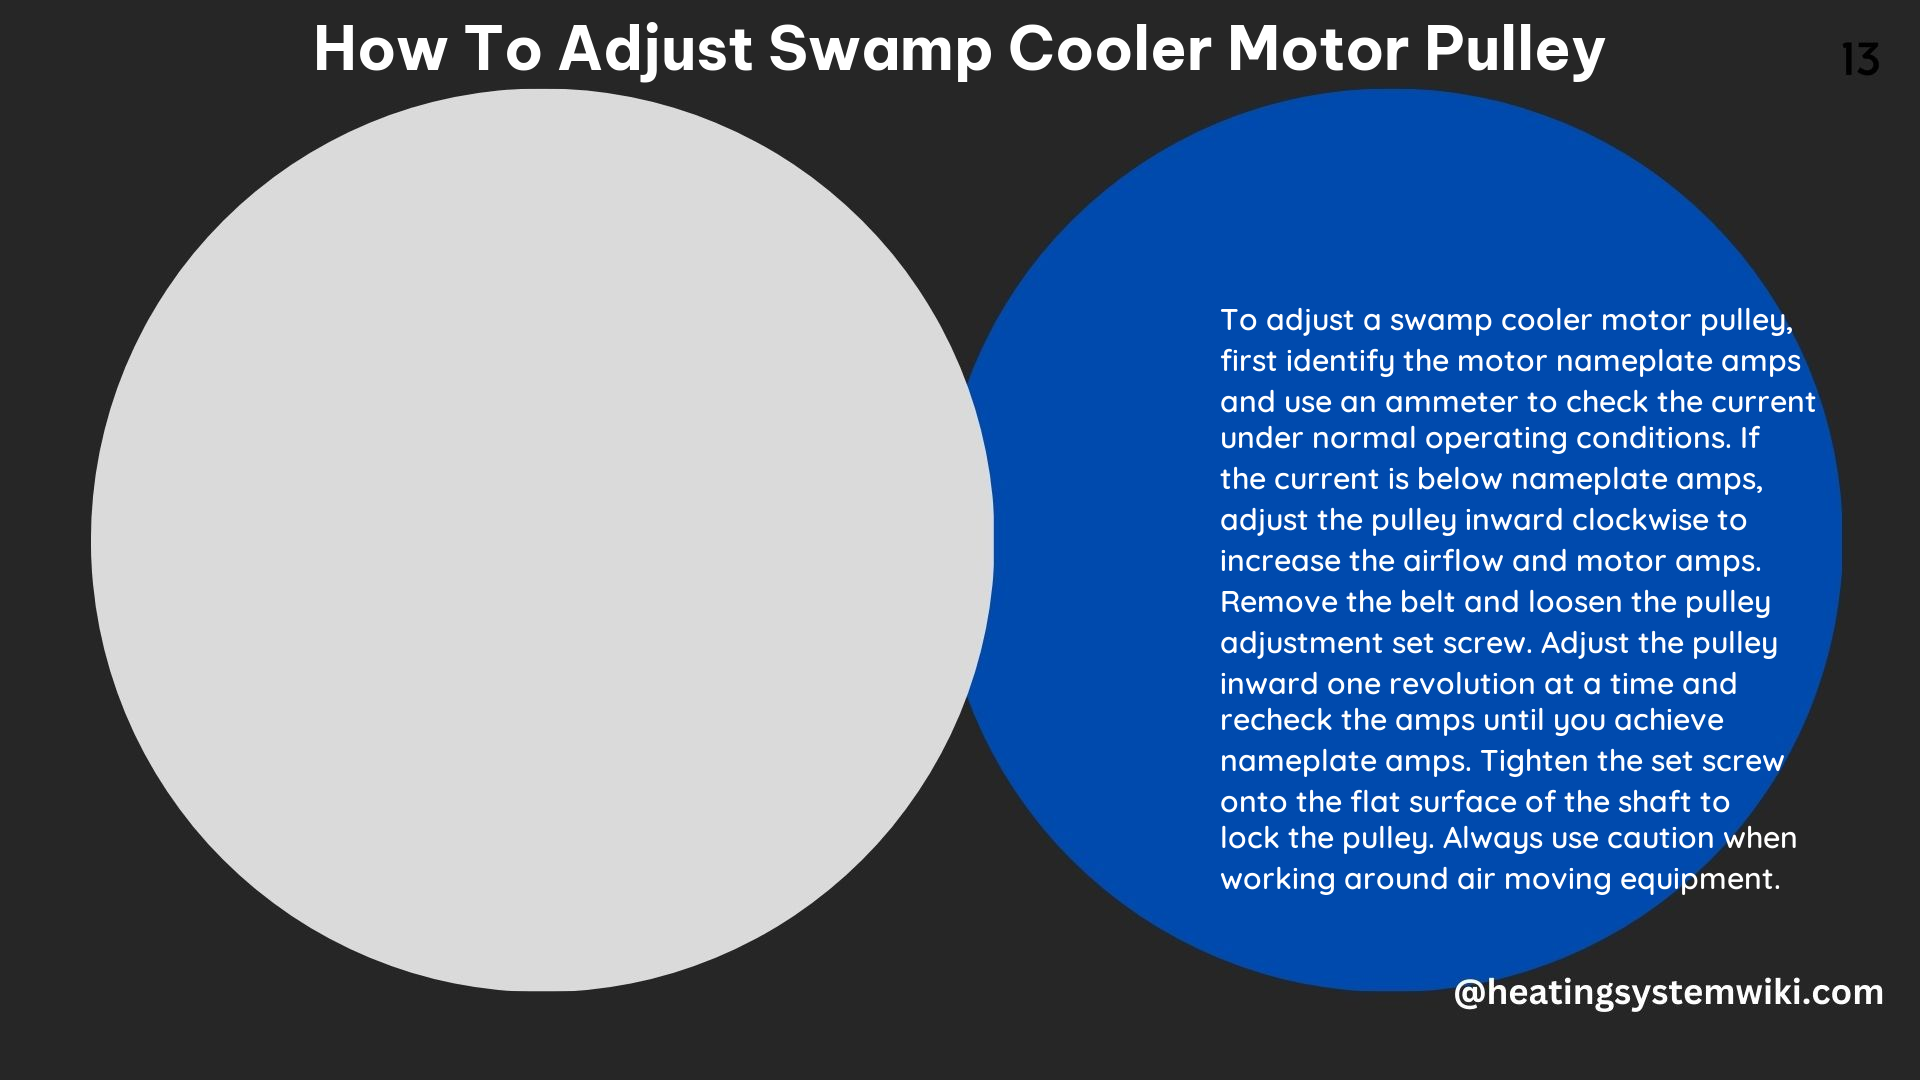 How to Adjust Swamp Cooler Motor Pulley